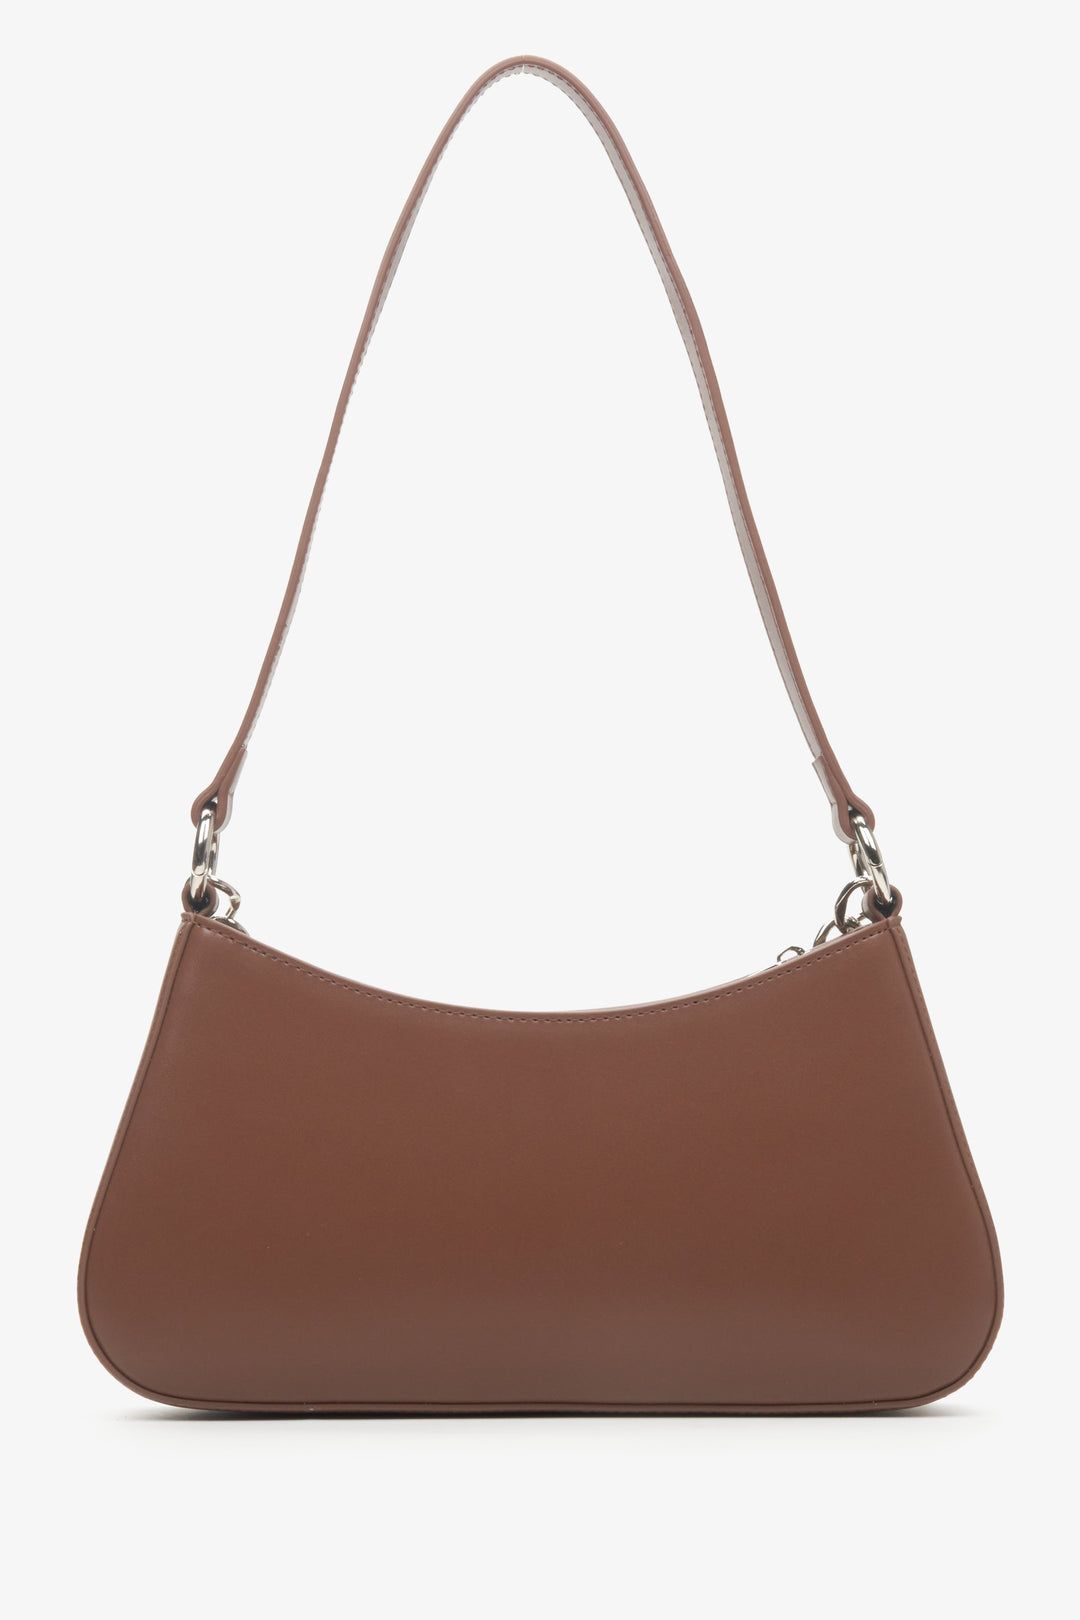 Women's brown leather baguette bag by Estro.